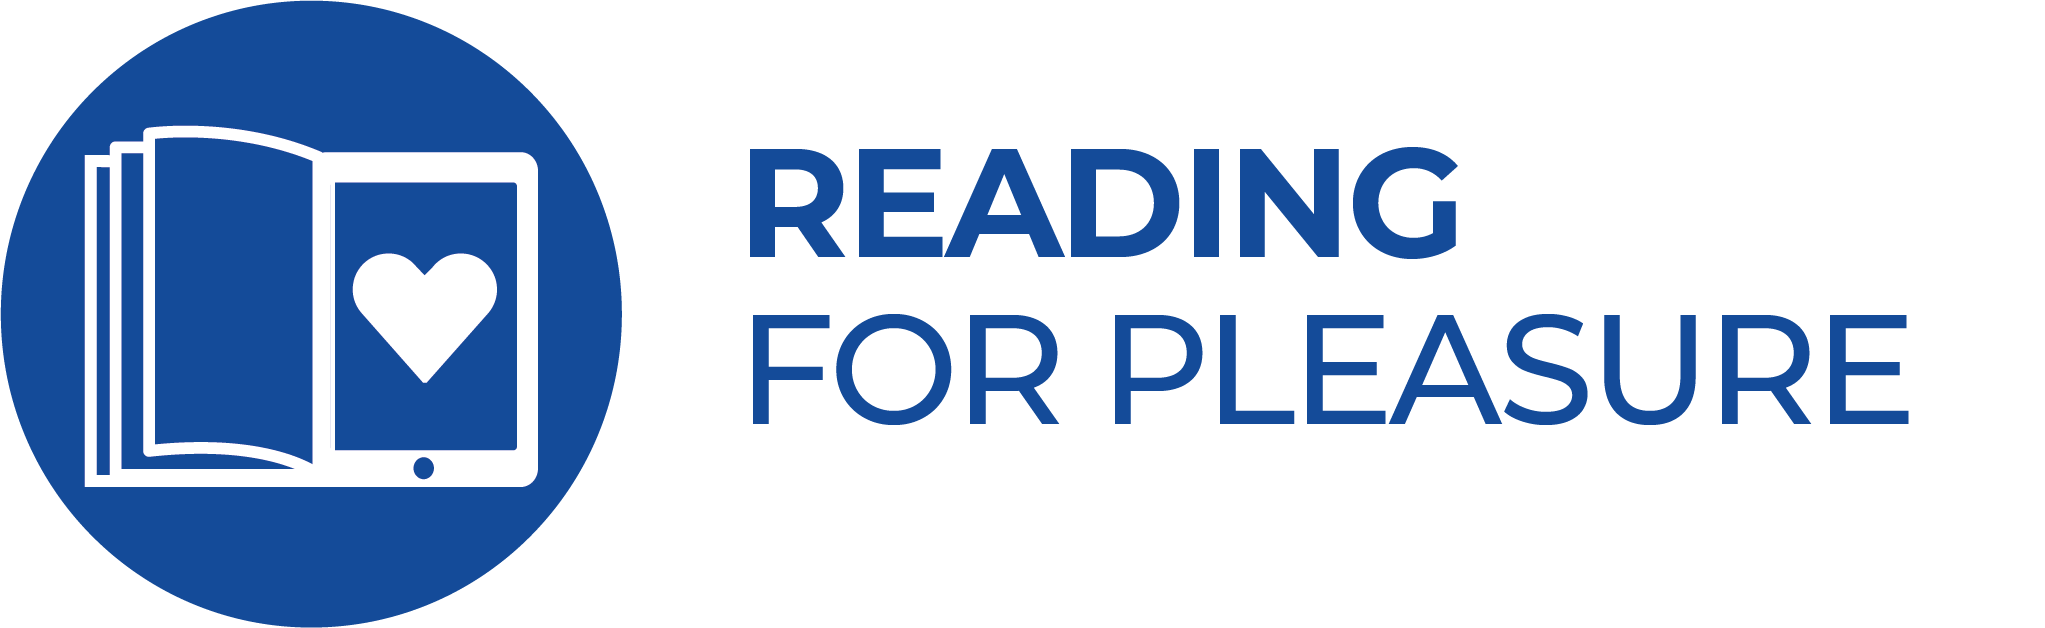 Reading for Pleasure logo - blue